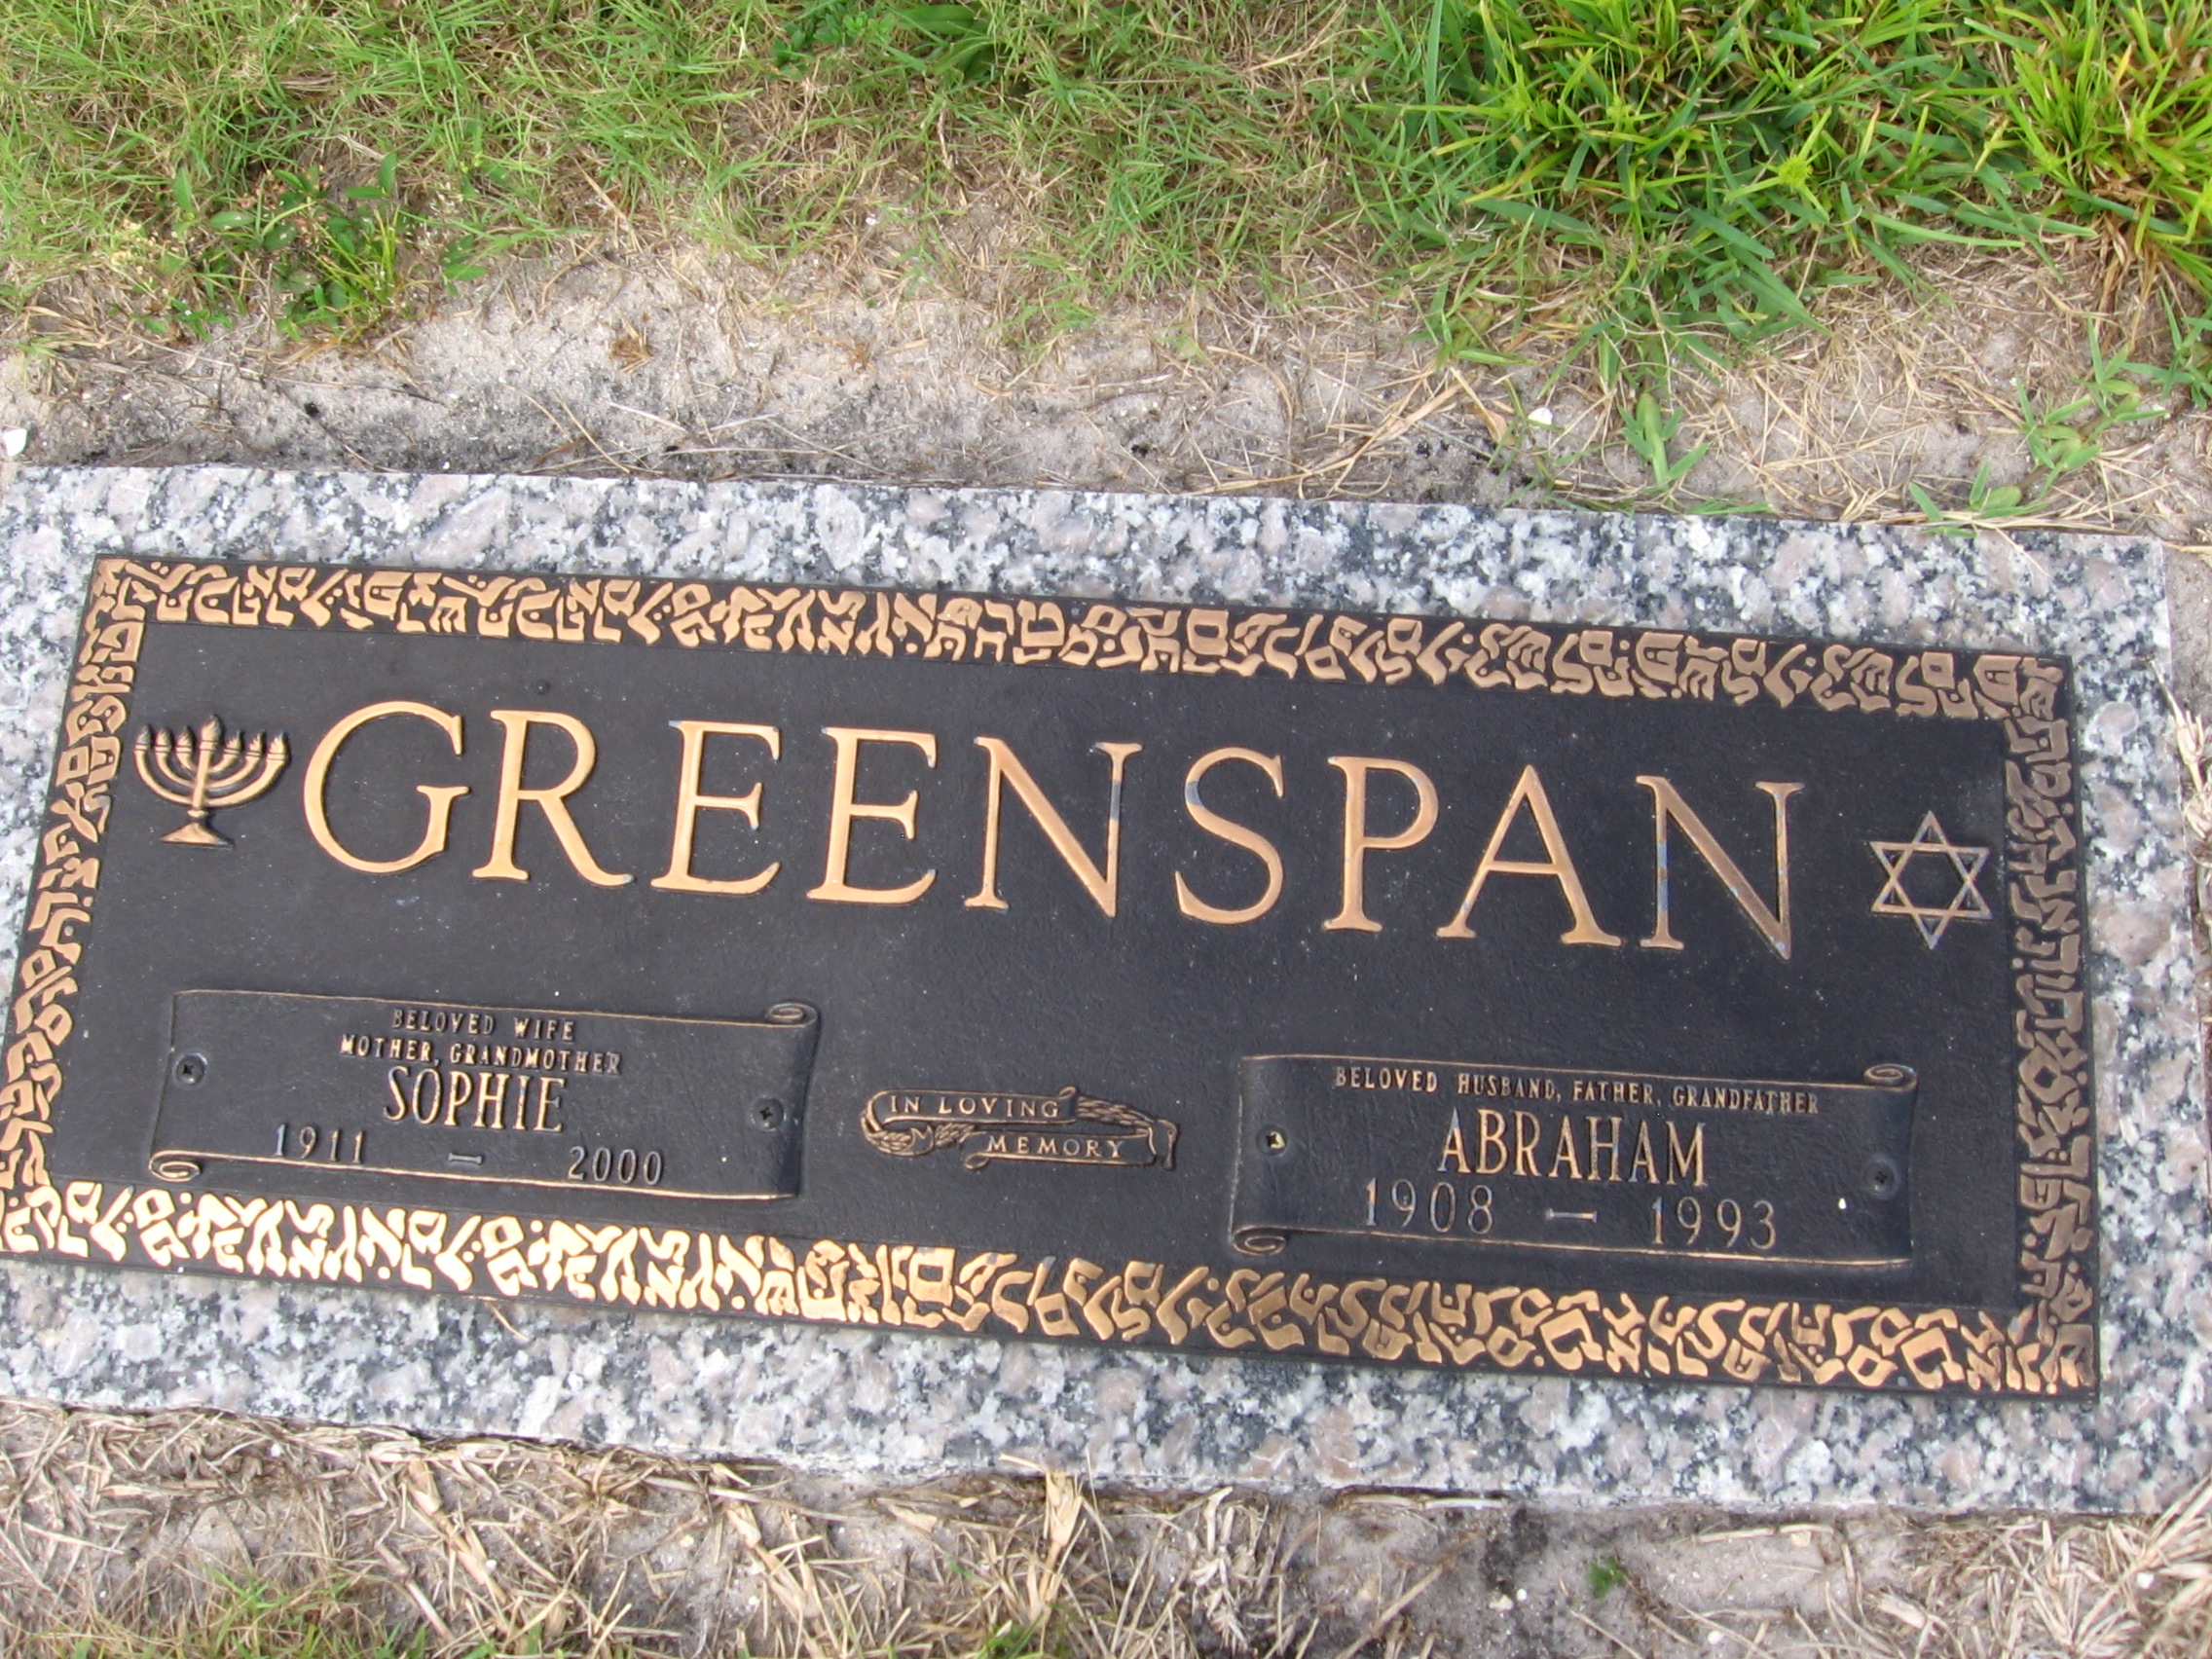 Abraham Greenspan